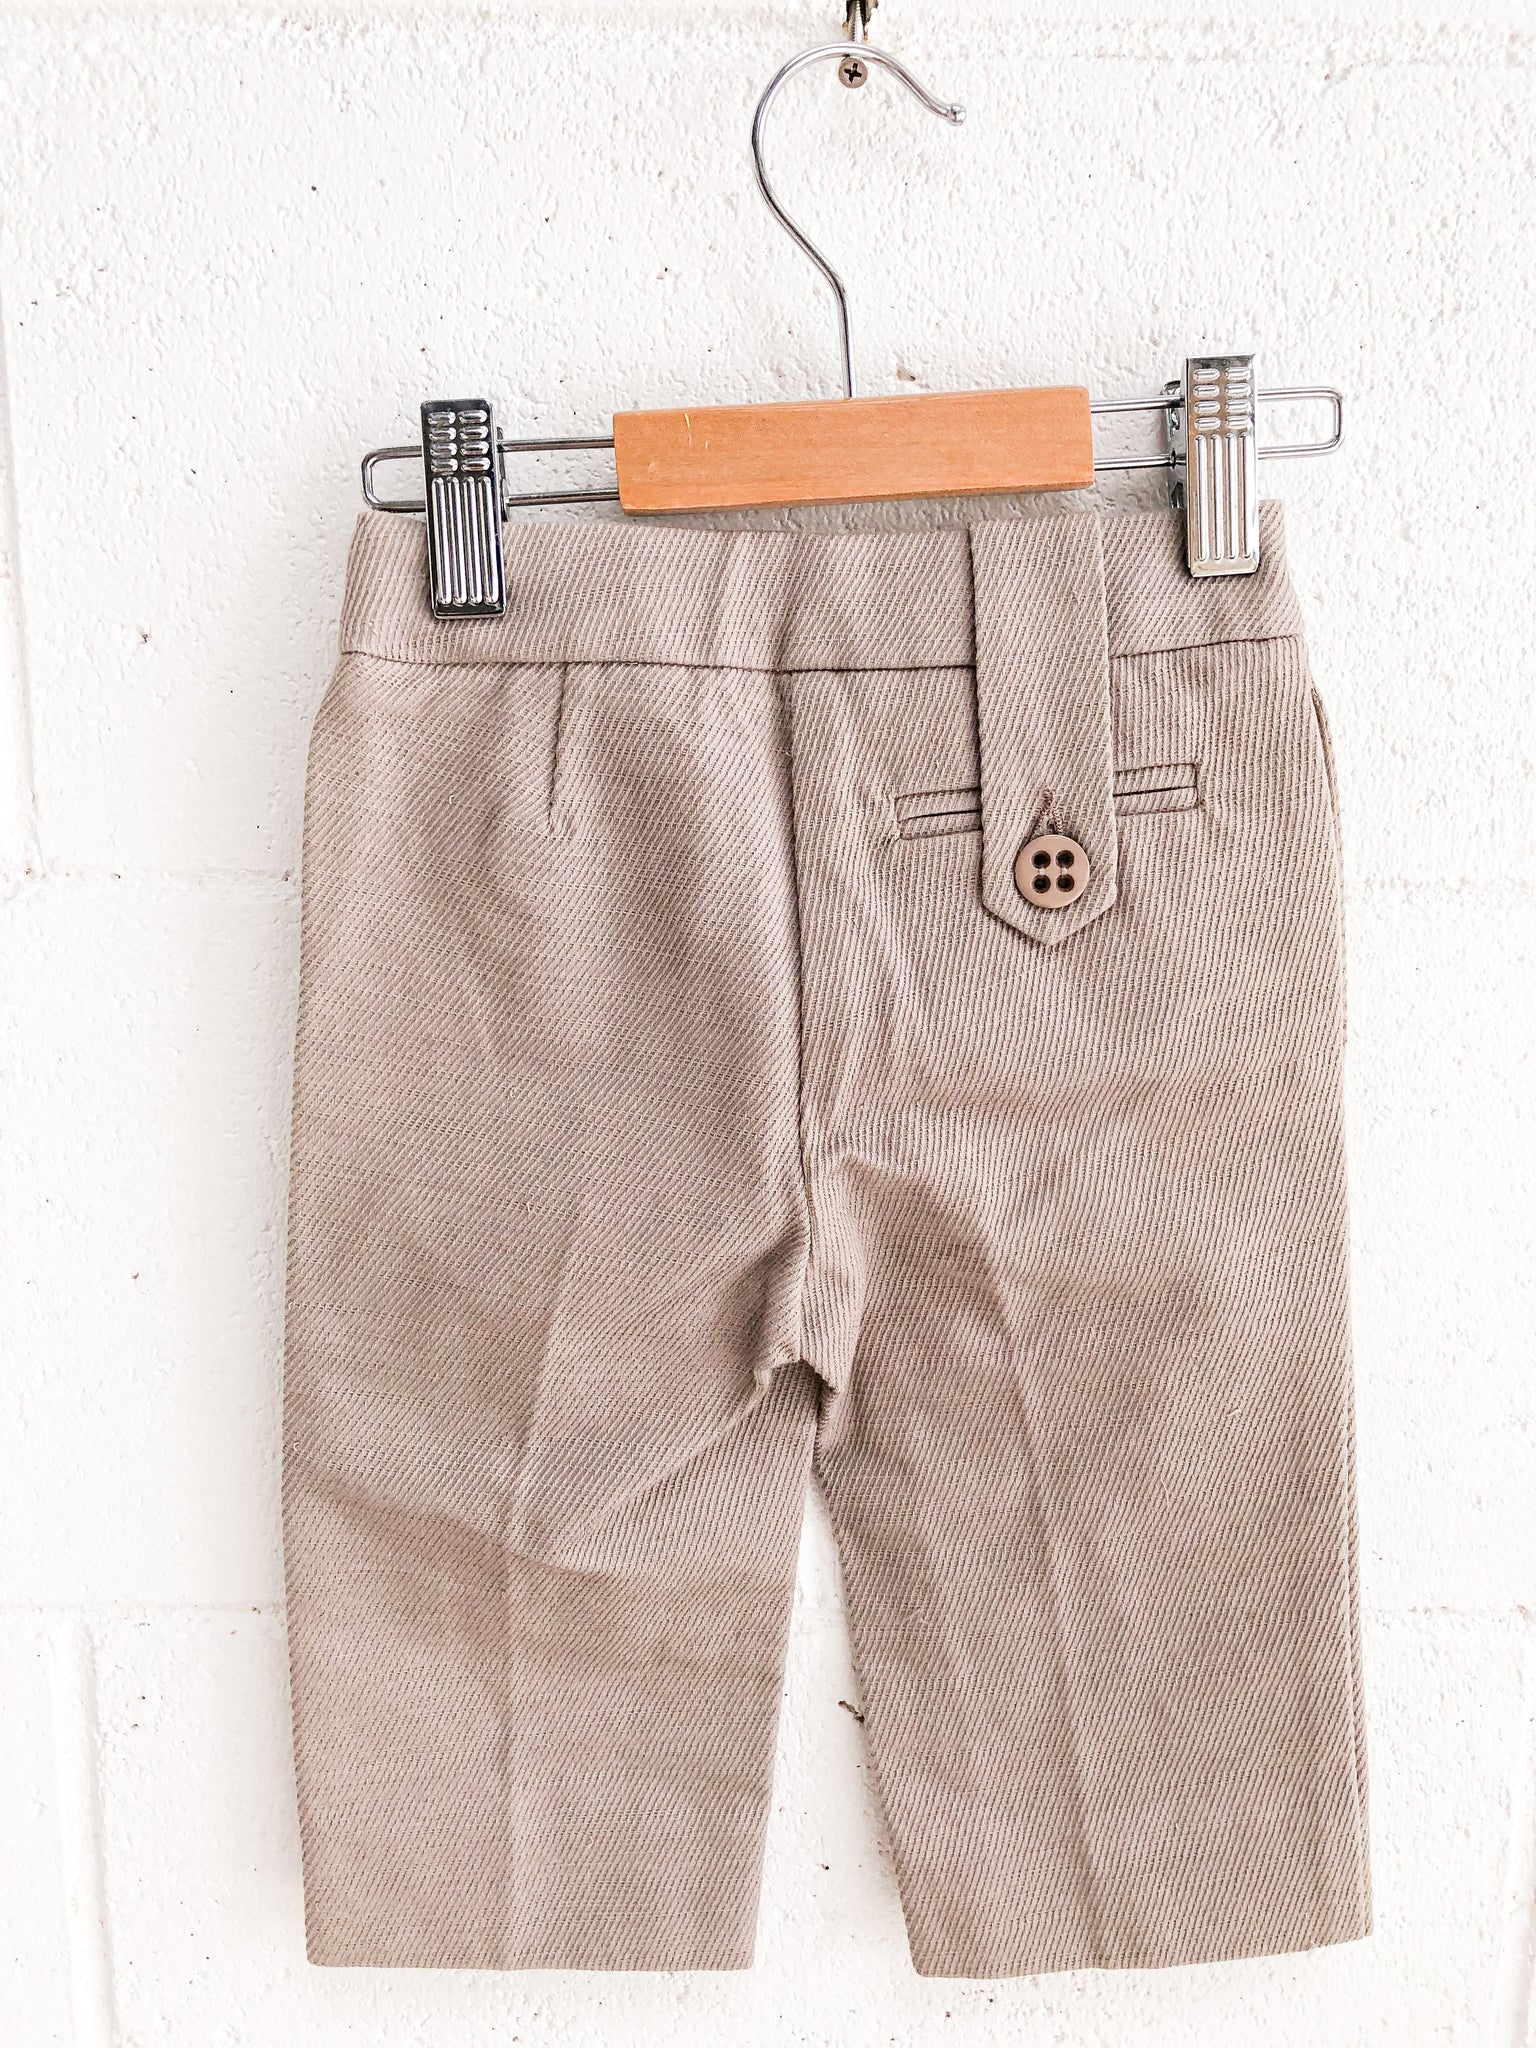 CHLOÉ Grey Cotton Trouser Pants 6M